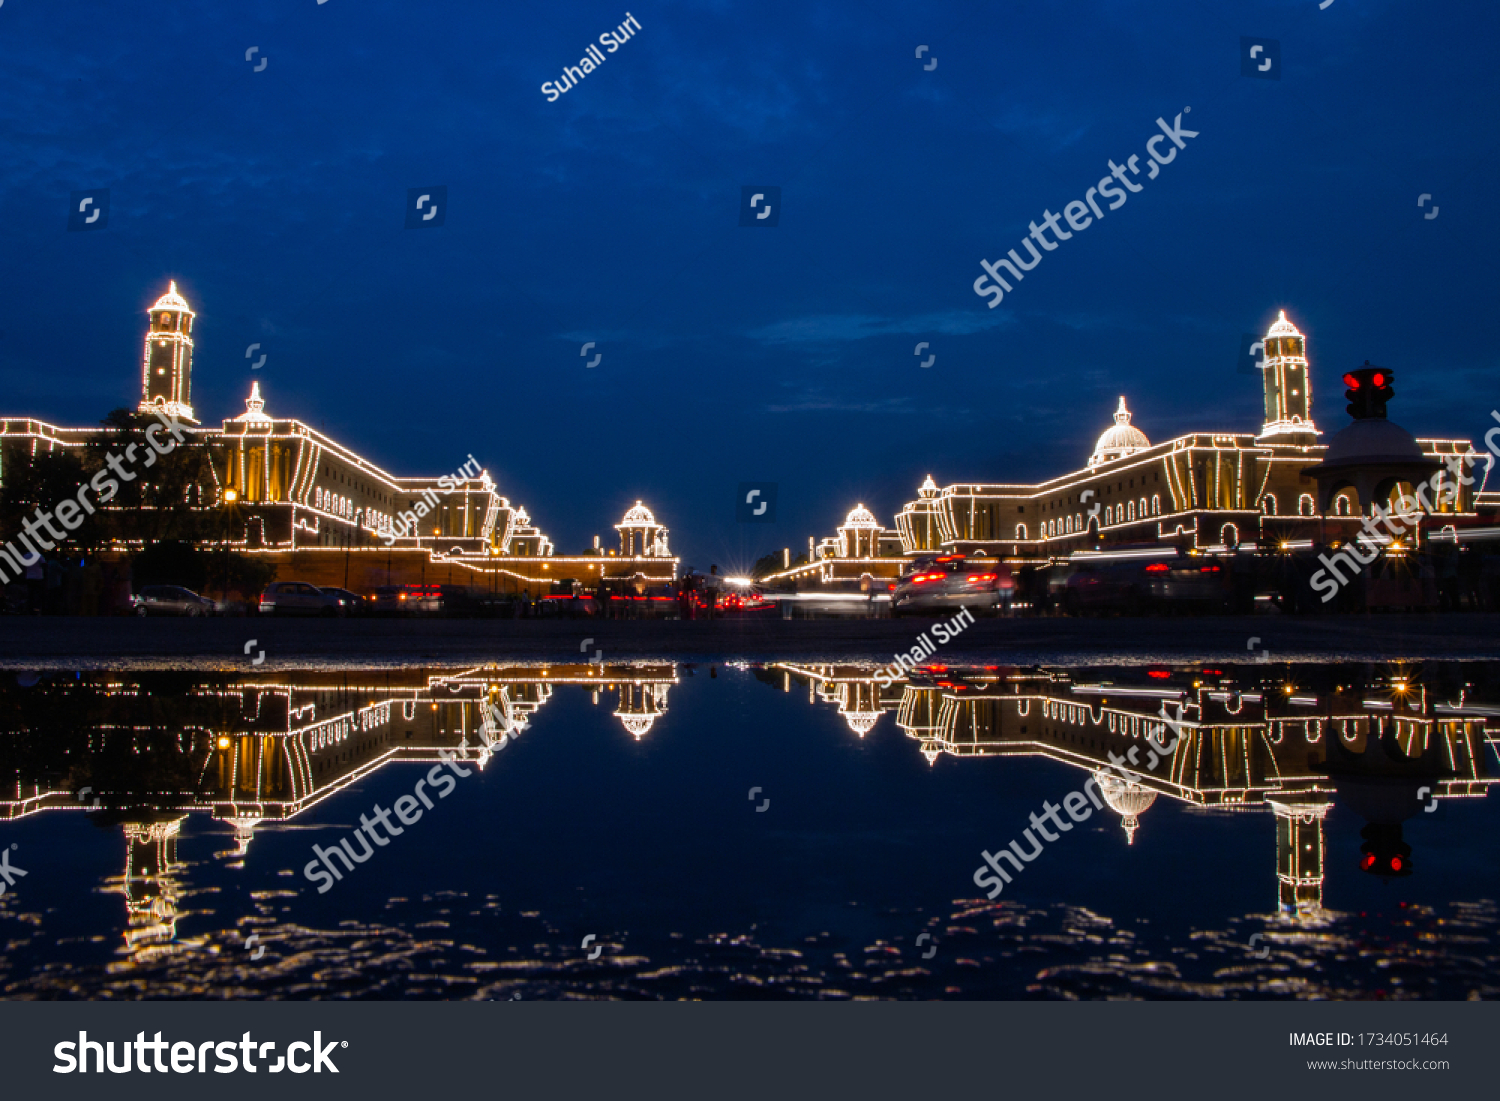 Reflection of Indian President's Estate, Rashtrapati Bhawan in Lutyen's Delhi, New Delhi, India during monsoon. #1734051464